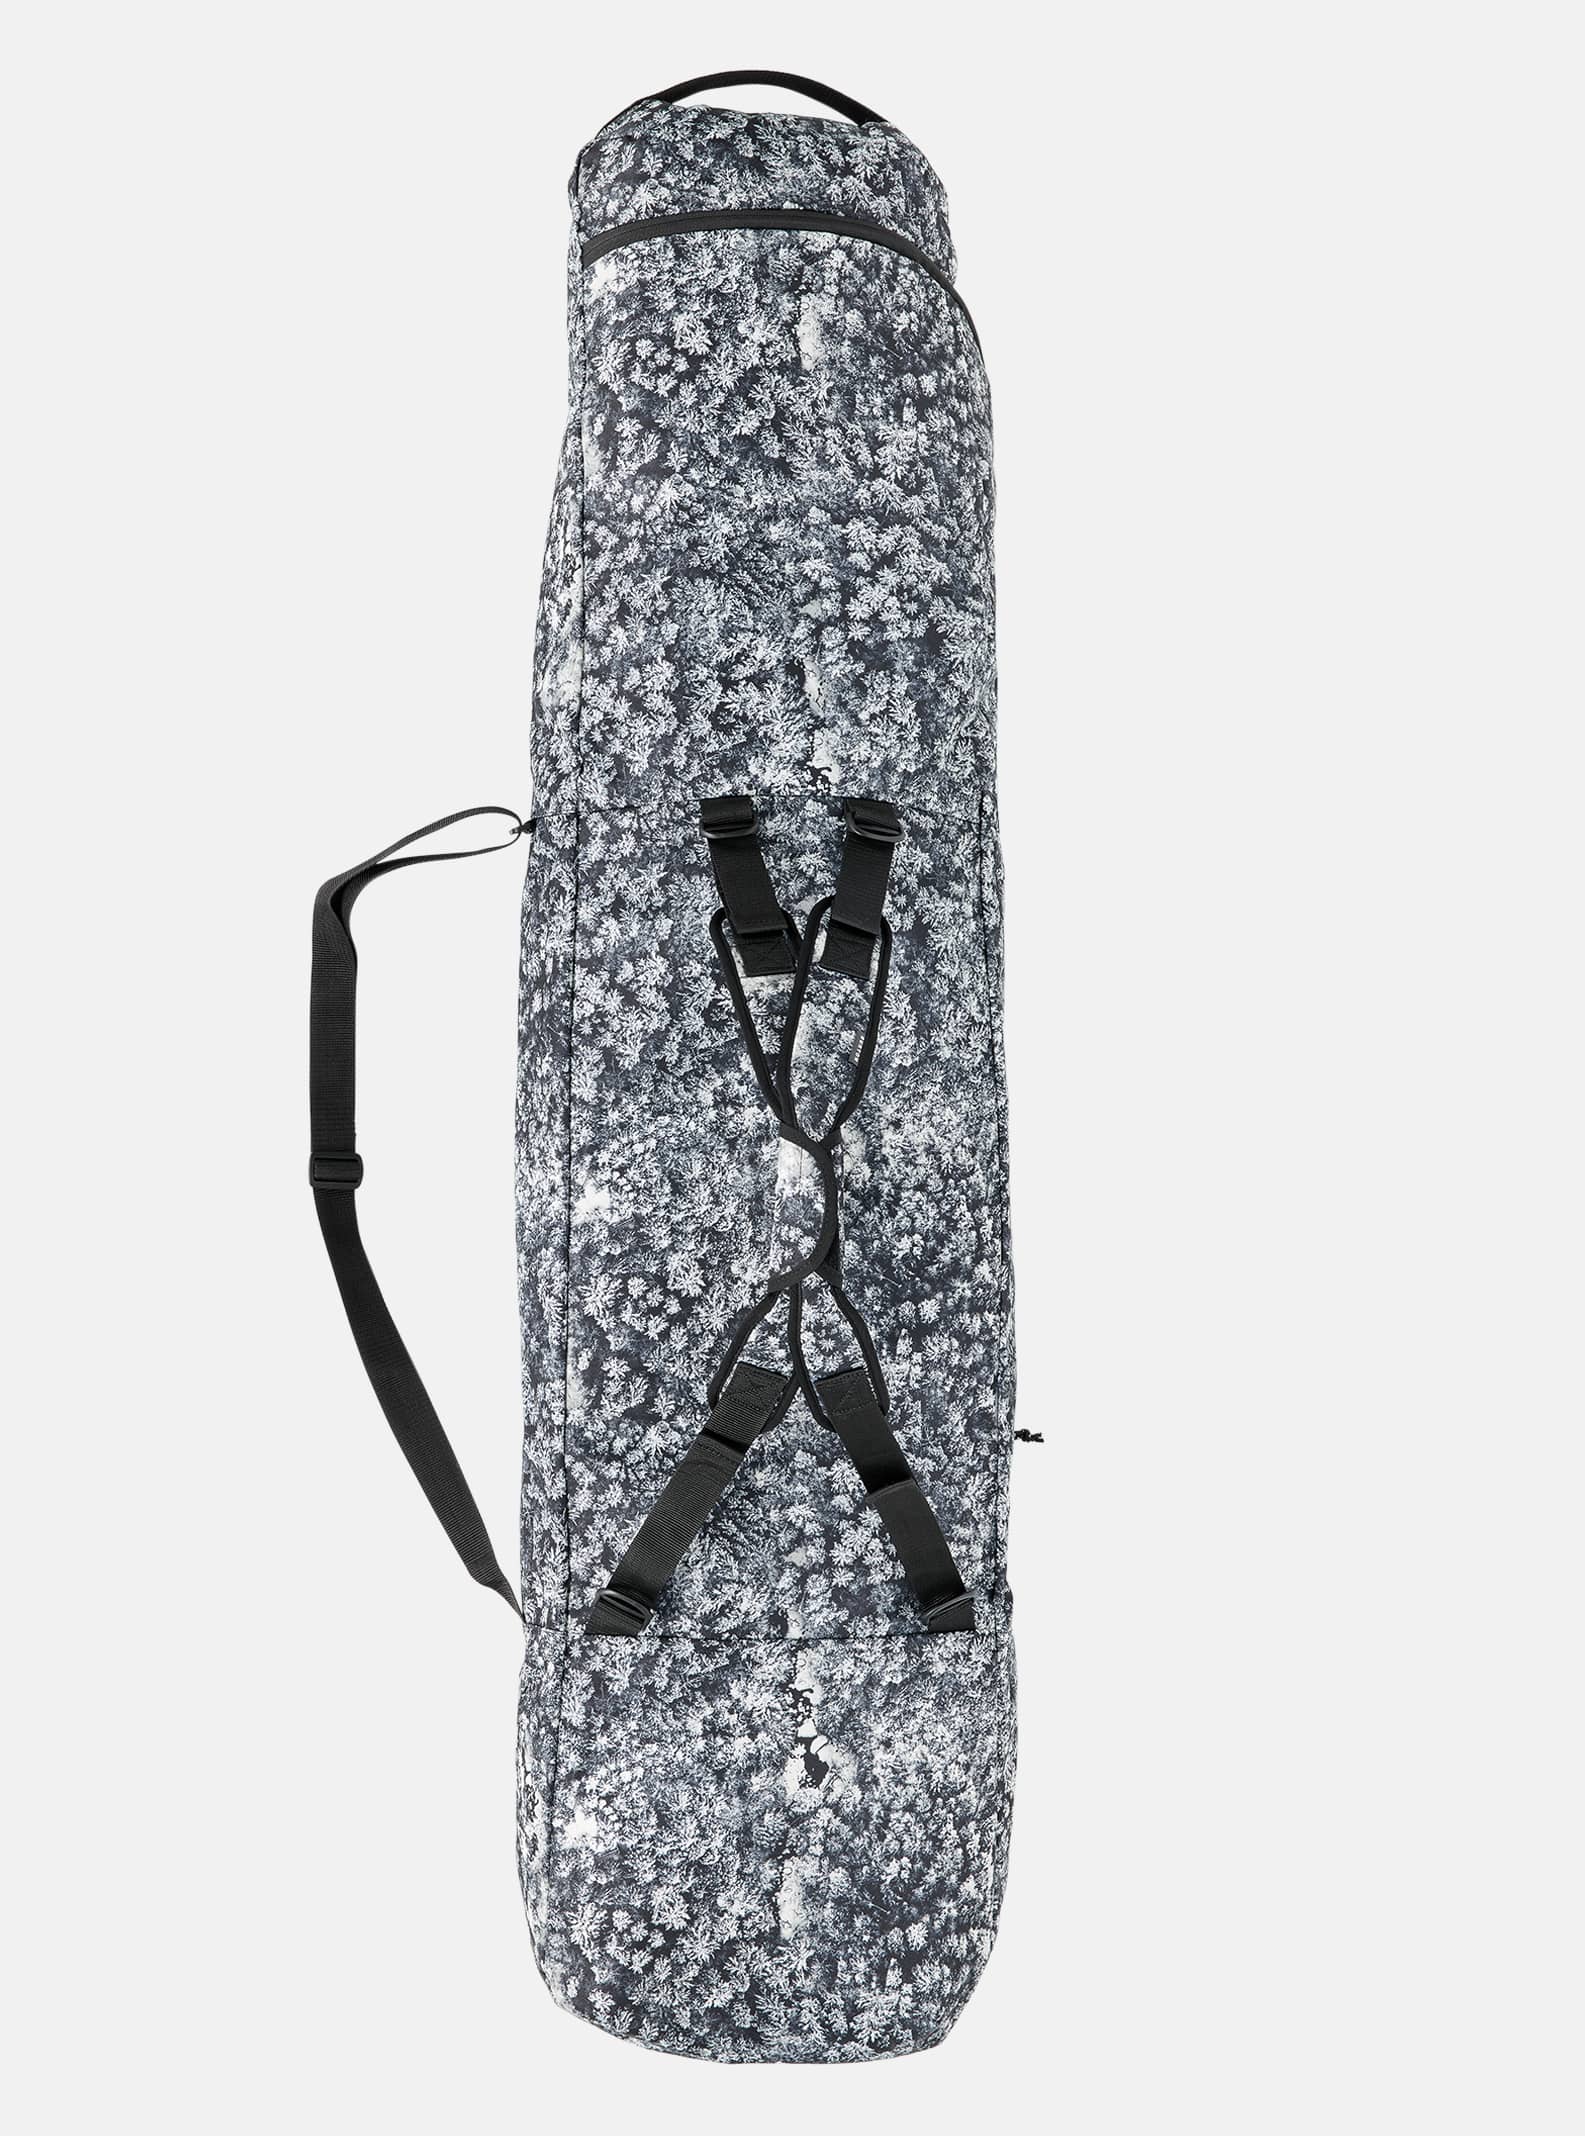 Laboratorio Barrio codicioso Snowboarding Gear Bags | Burton Snowboards US